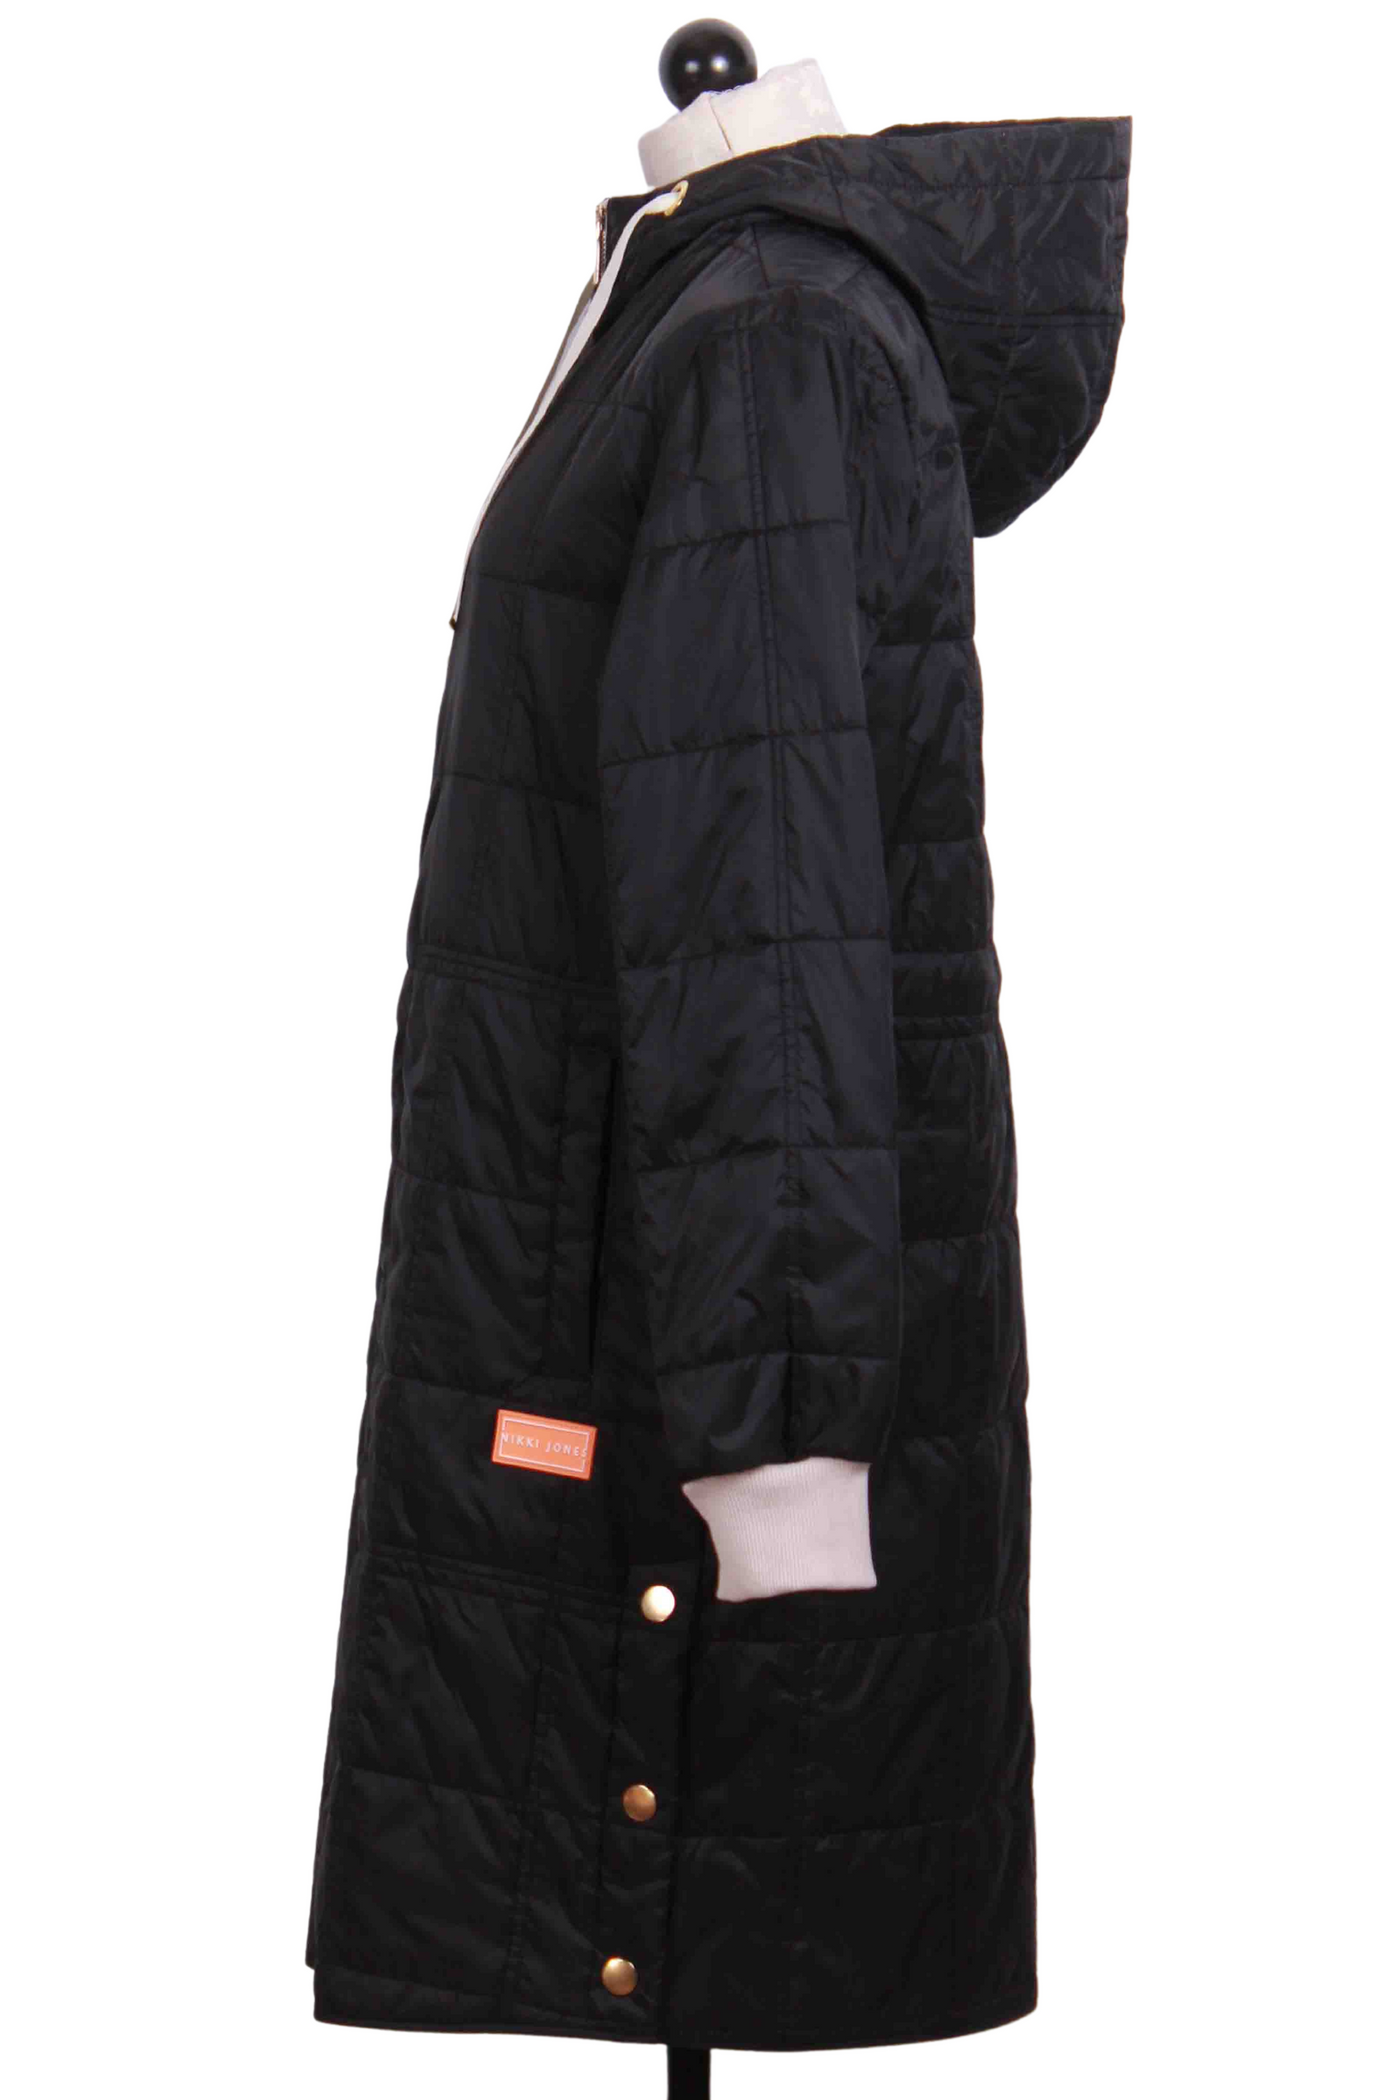 side view of Black Hooded Quilted Leonardo Coat by Nikki Jones